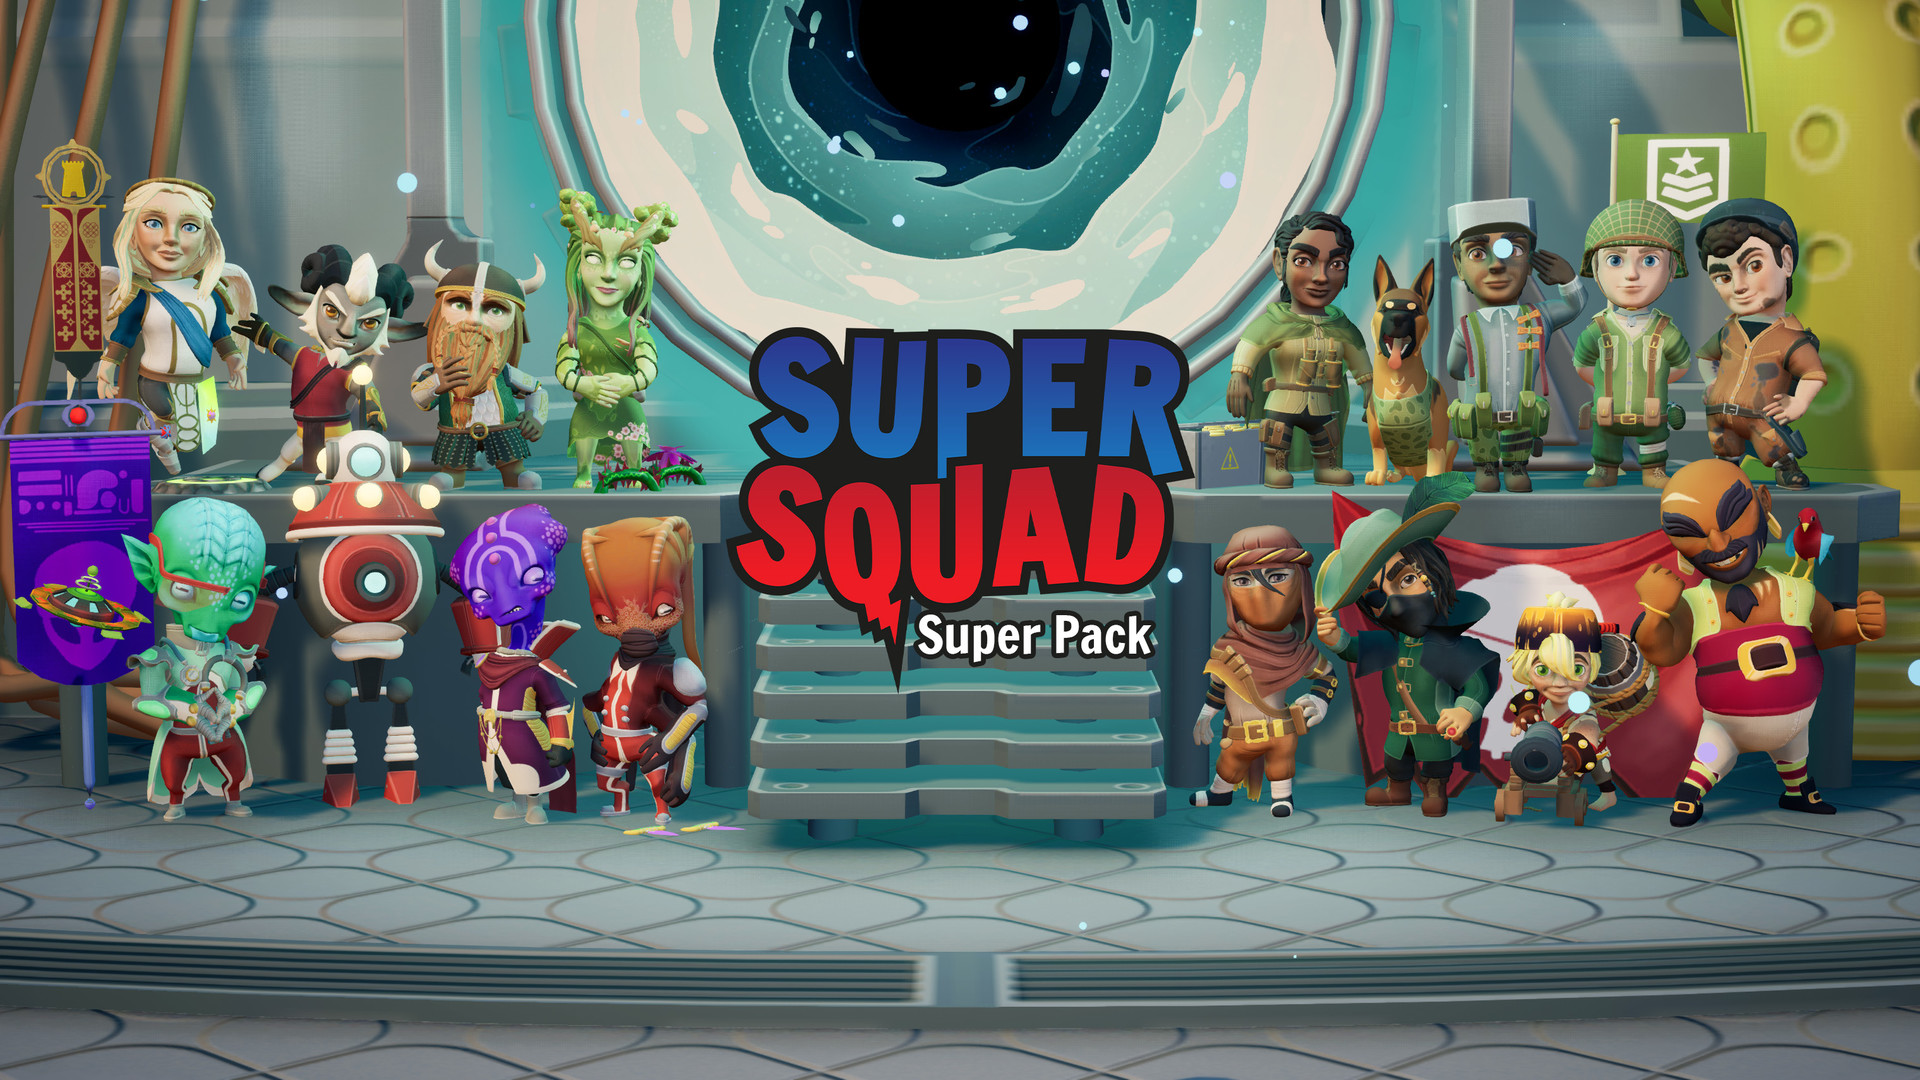 Super Squad - Super Pack DLC Steam CD Key